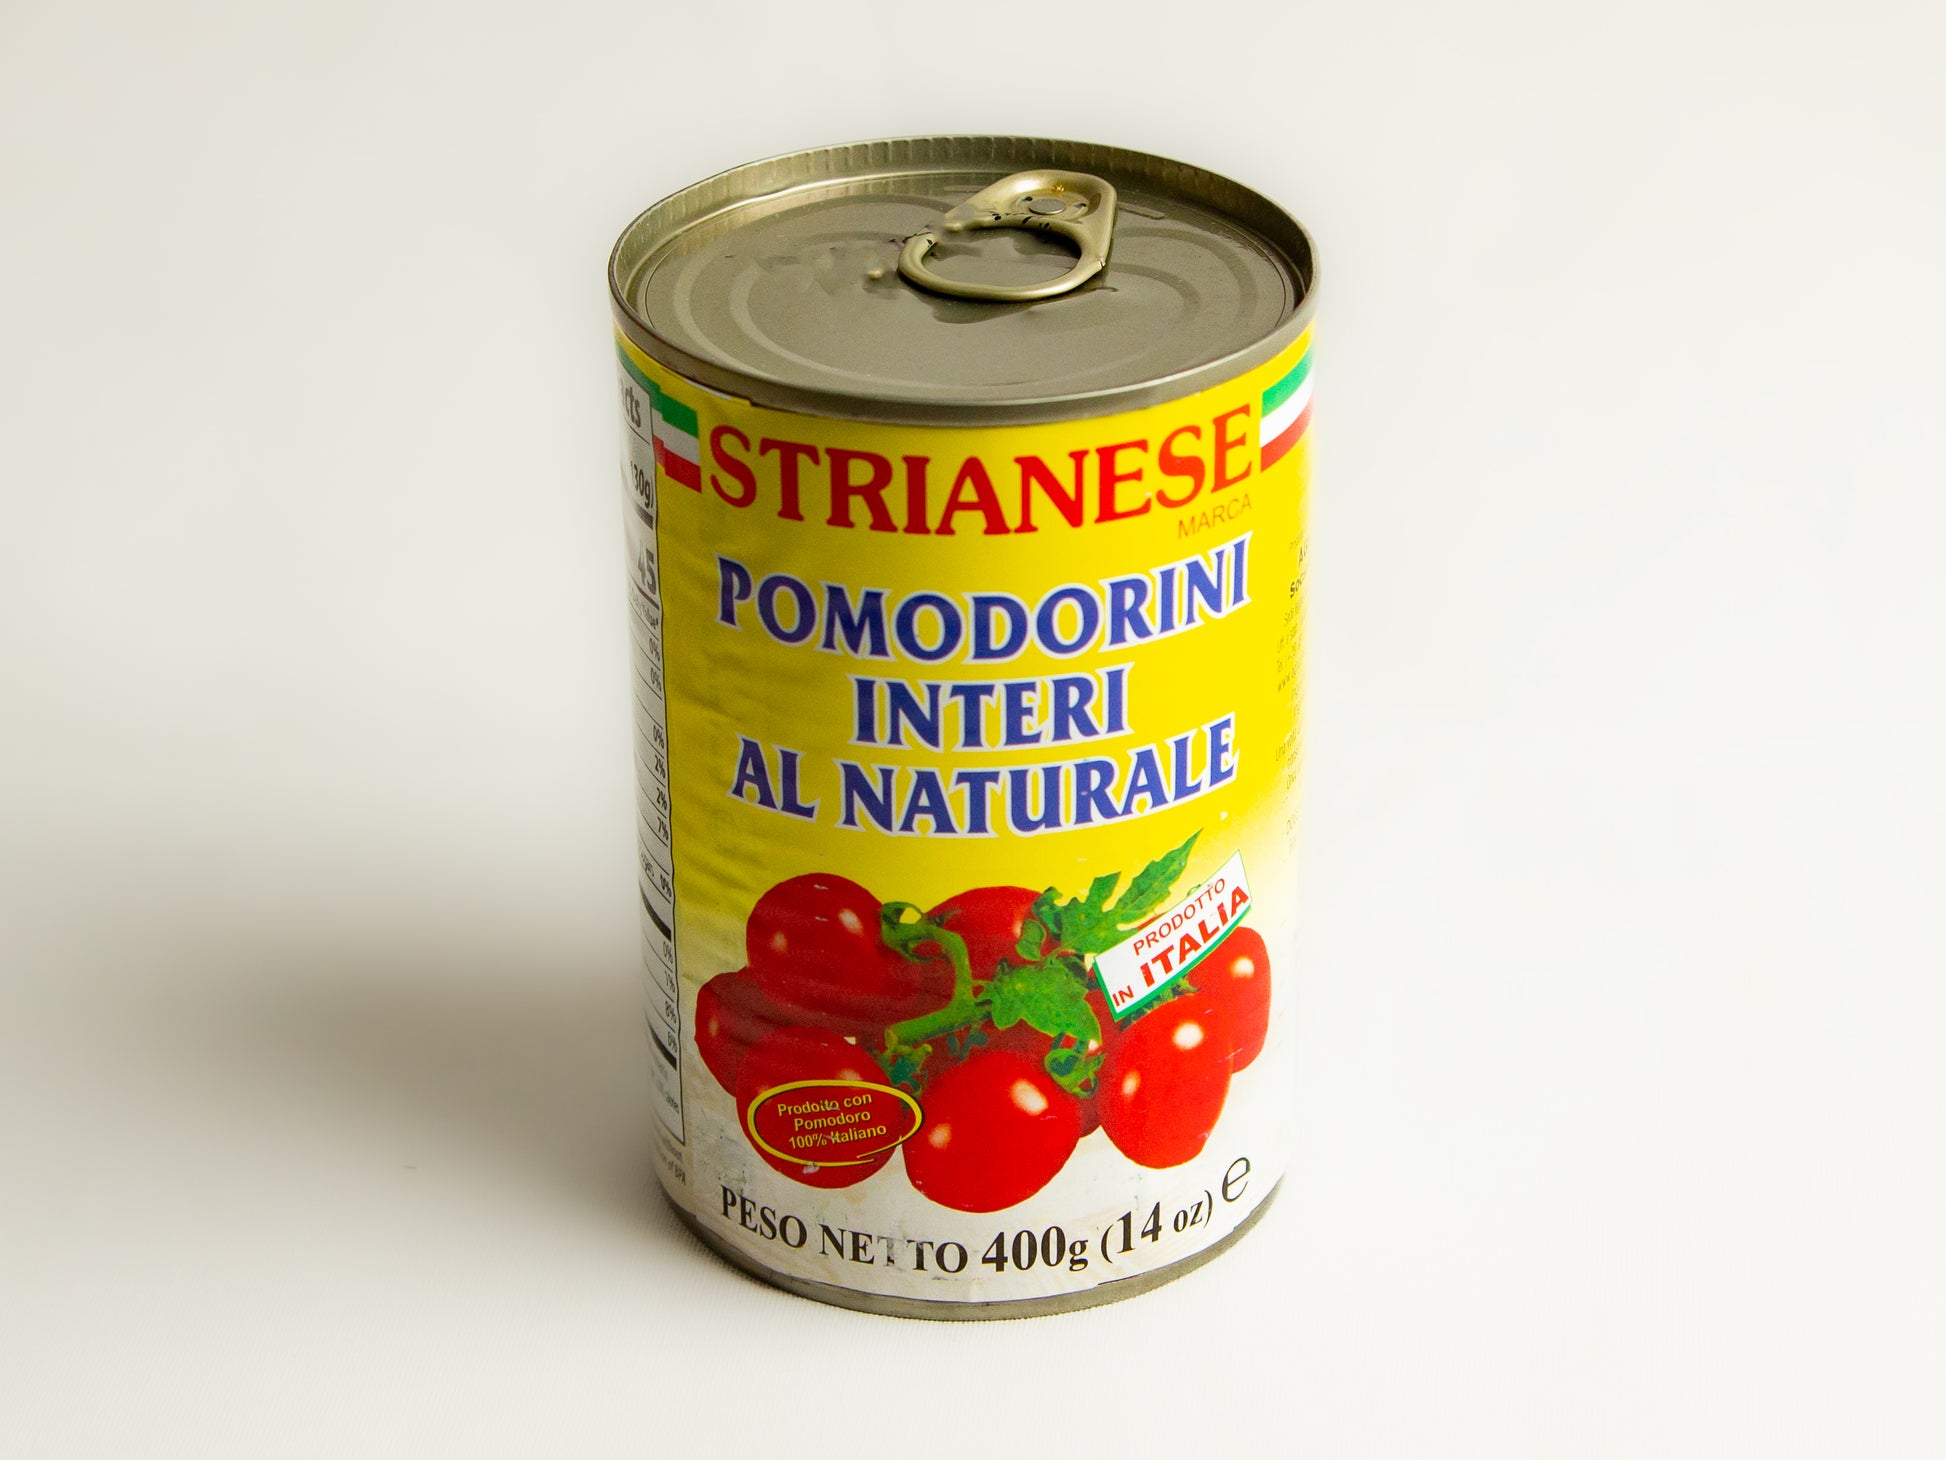 can of Strianese Pomodorini small tomatoes